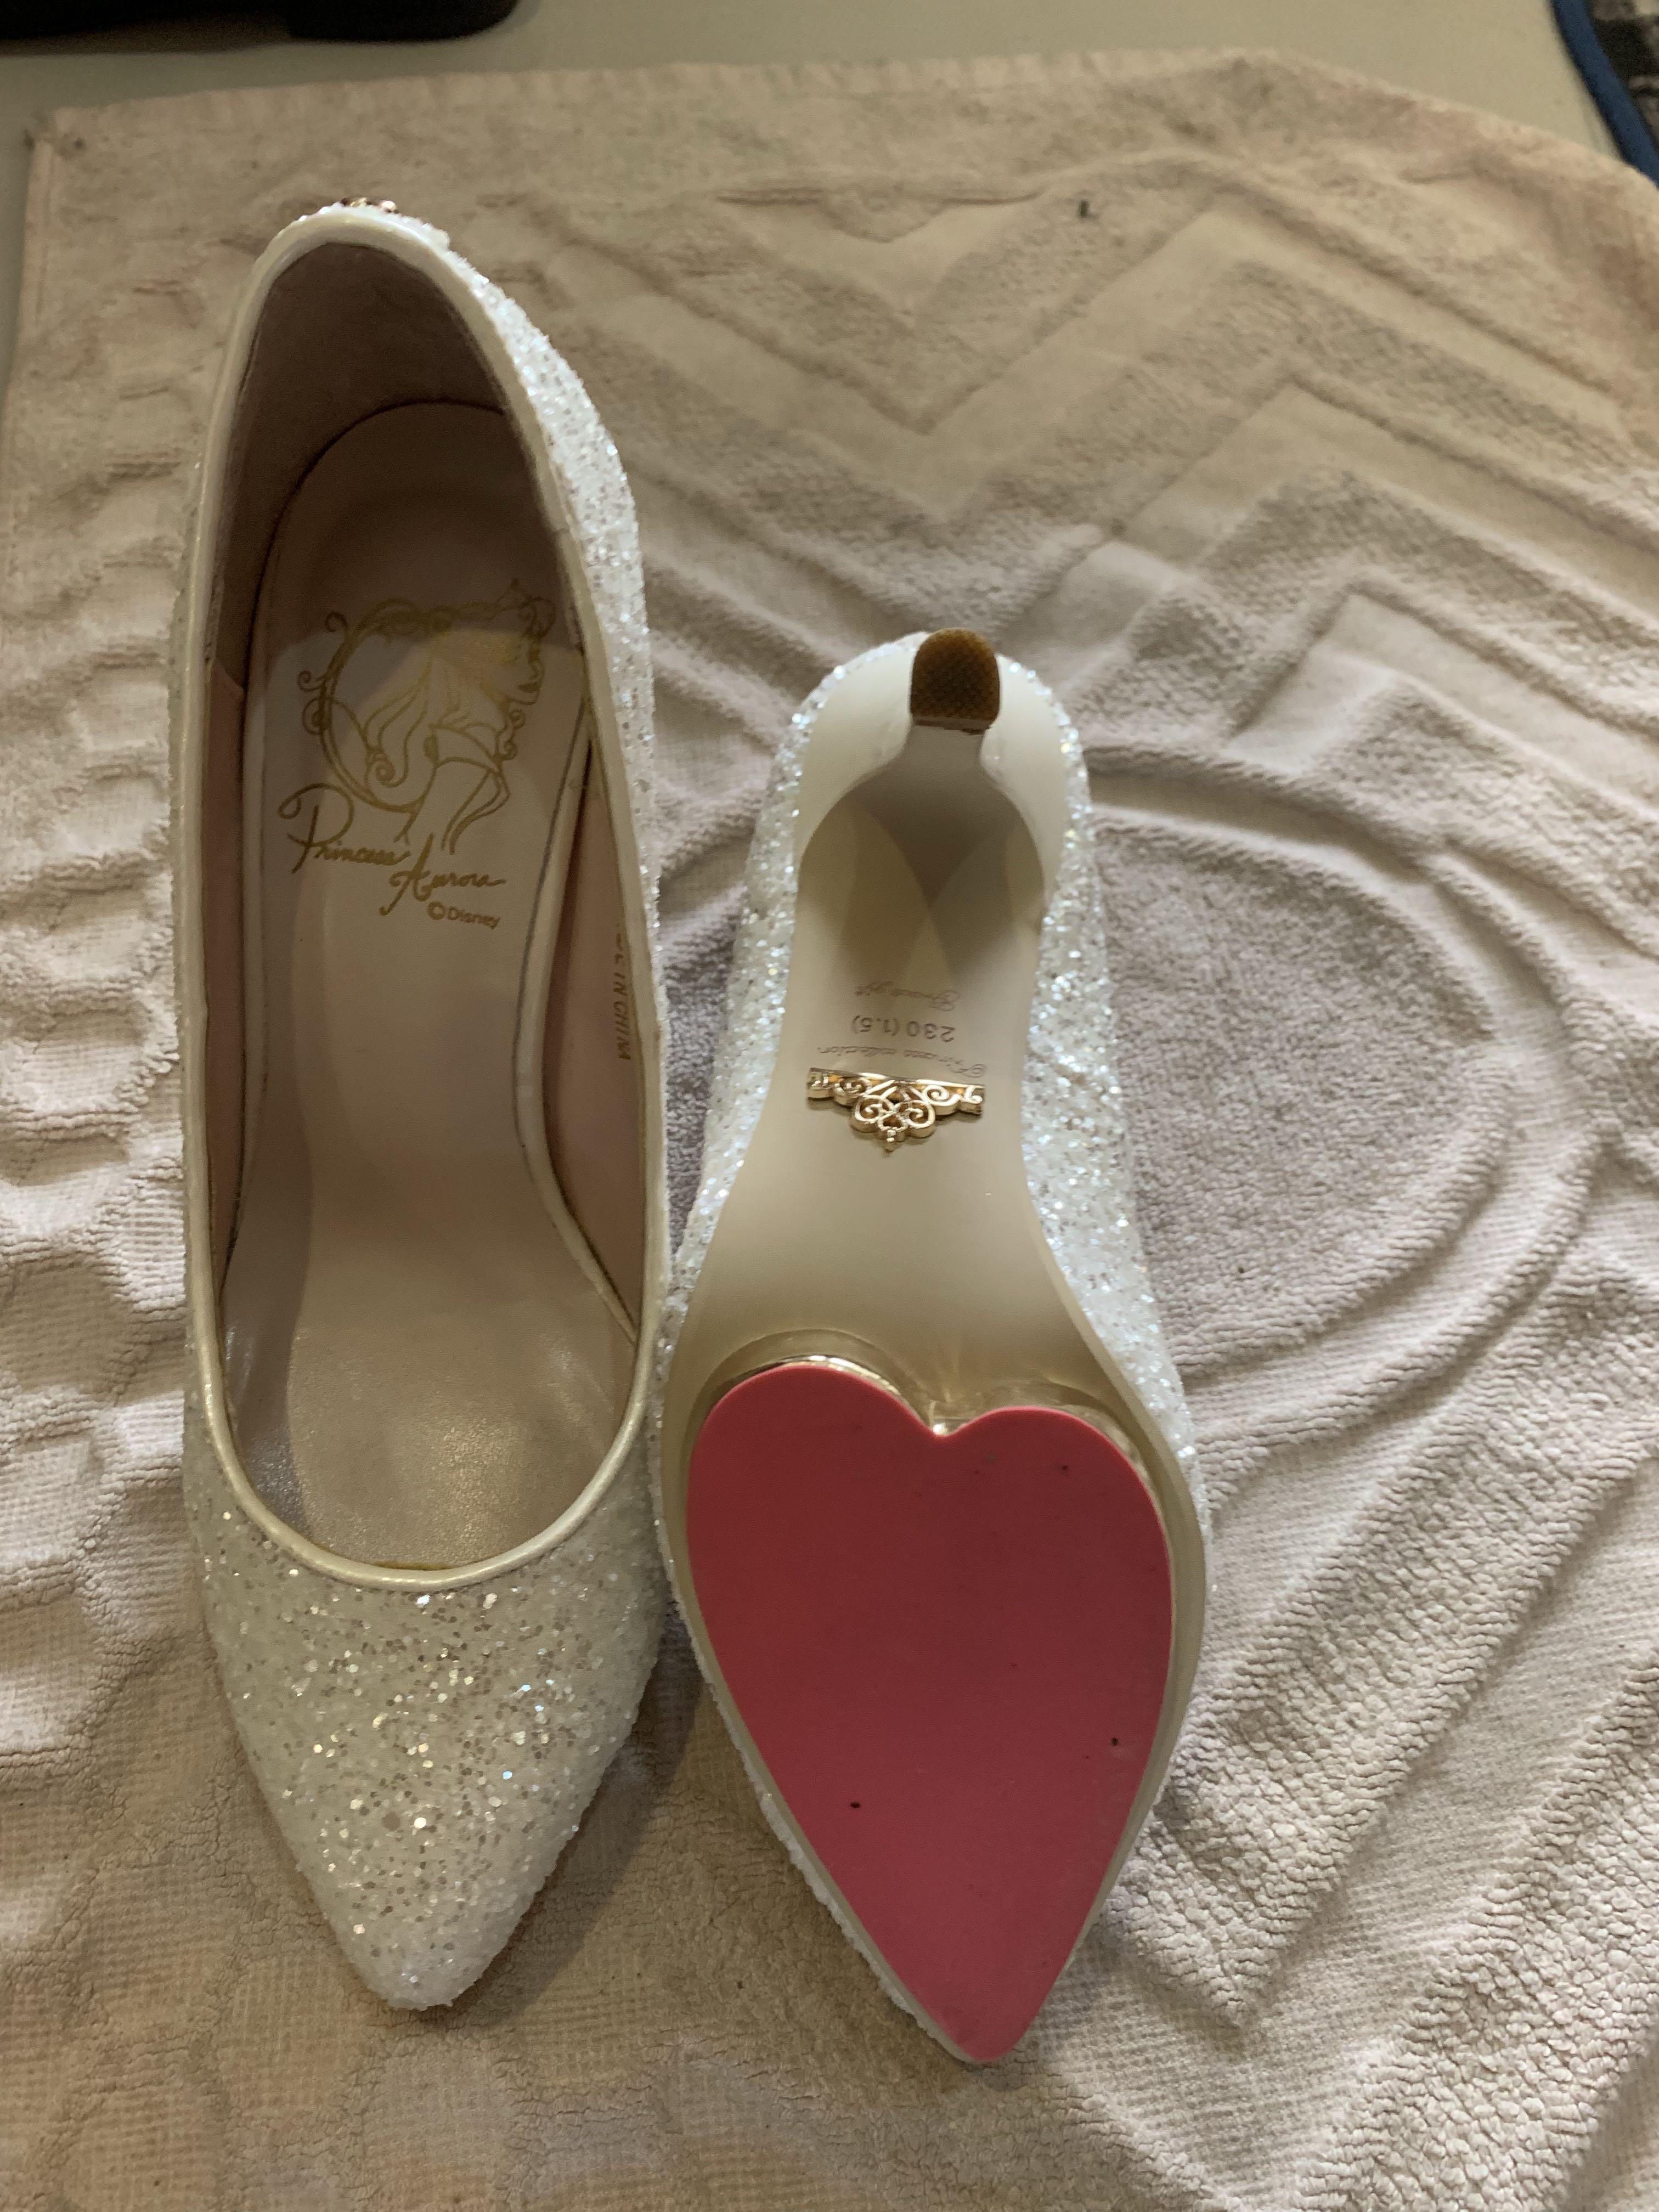 Sleeping beauty heart-shaped heels 